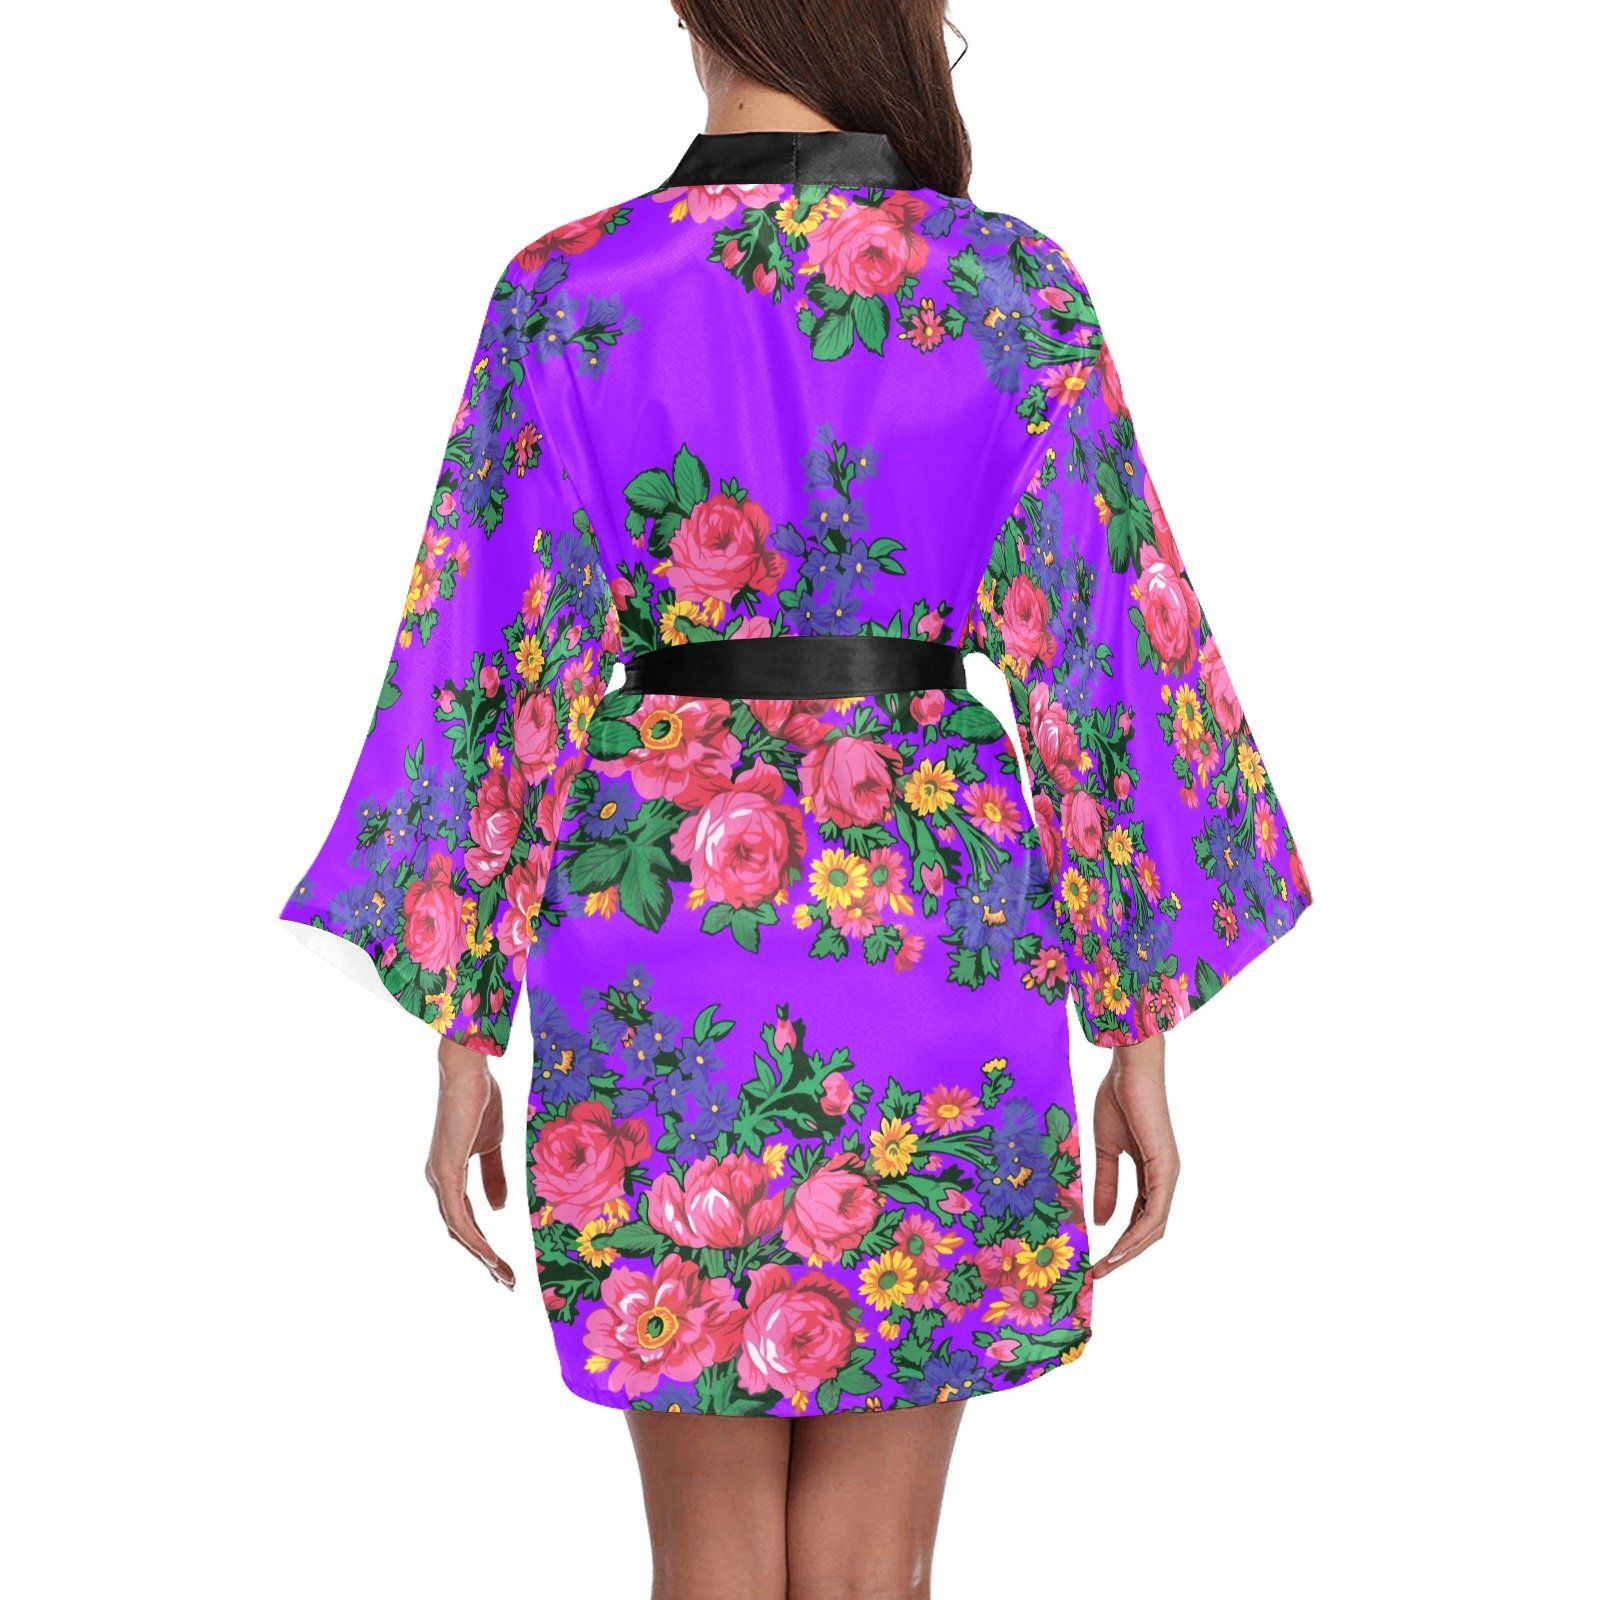 Kokum's Revenge Lilac Long Sleeve Kimono Robe Long Sleeve Kimono Robe e-joyer 